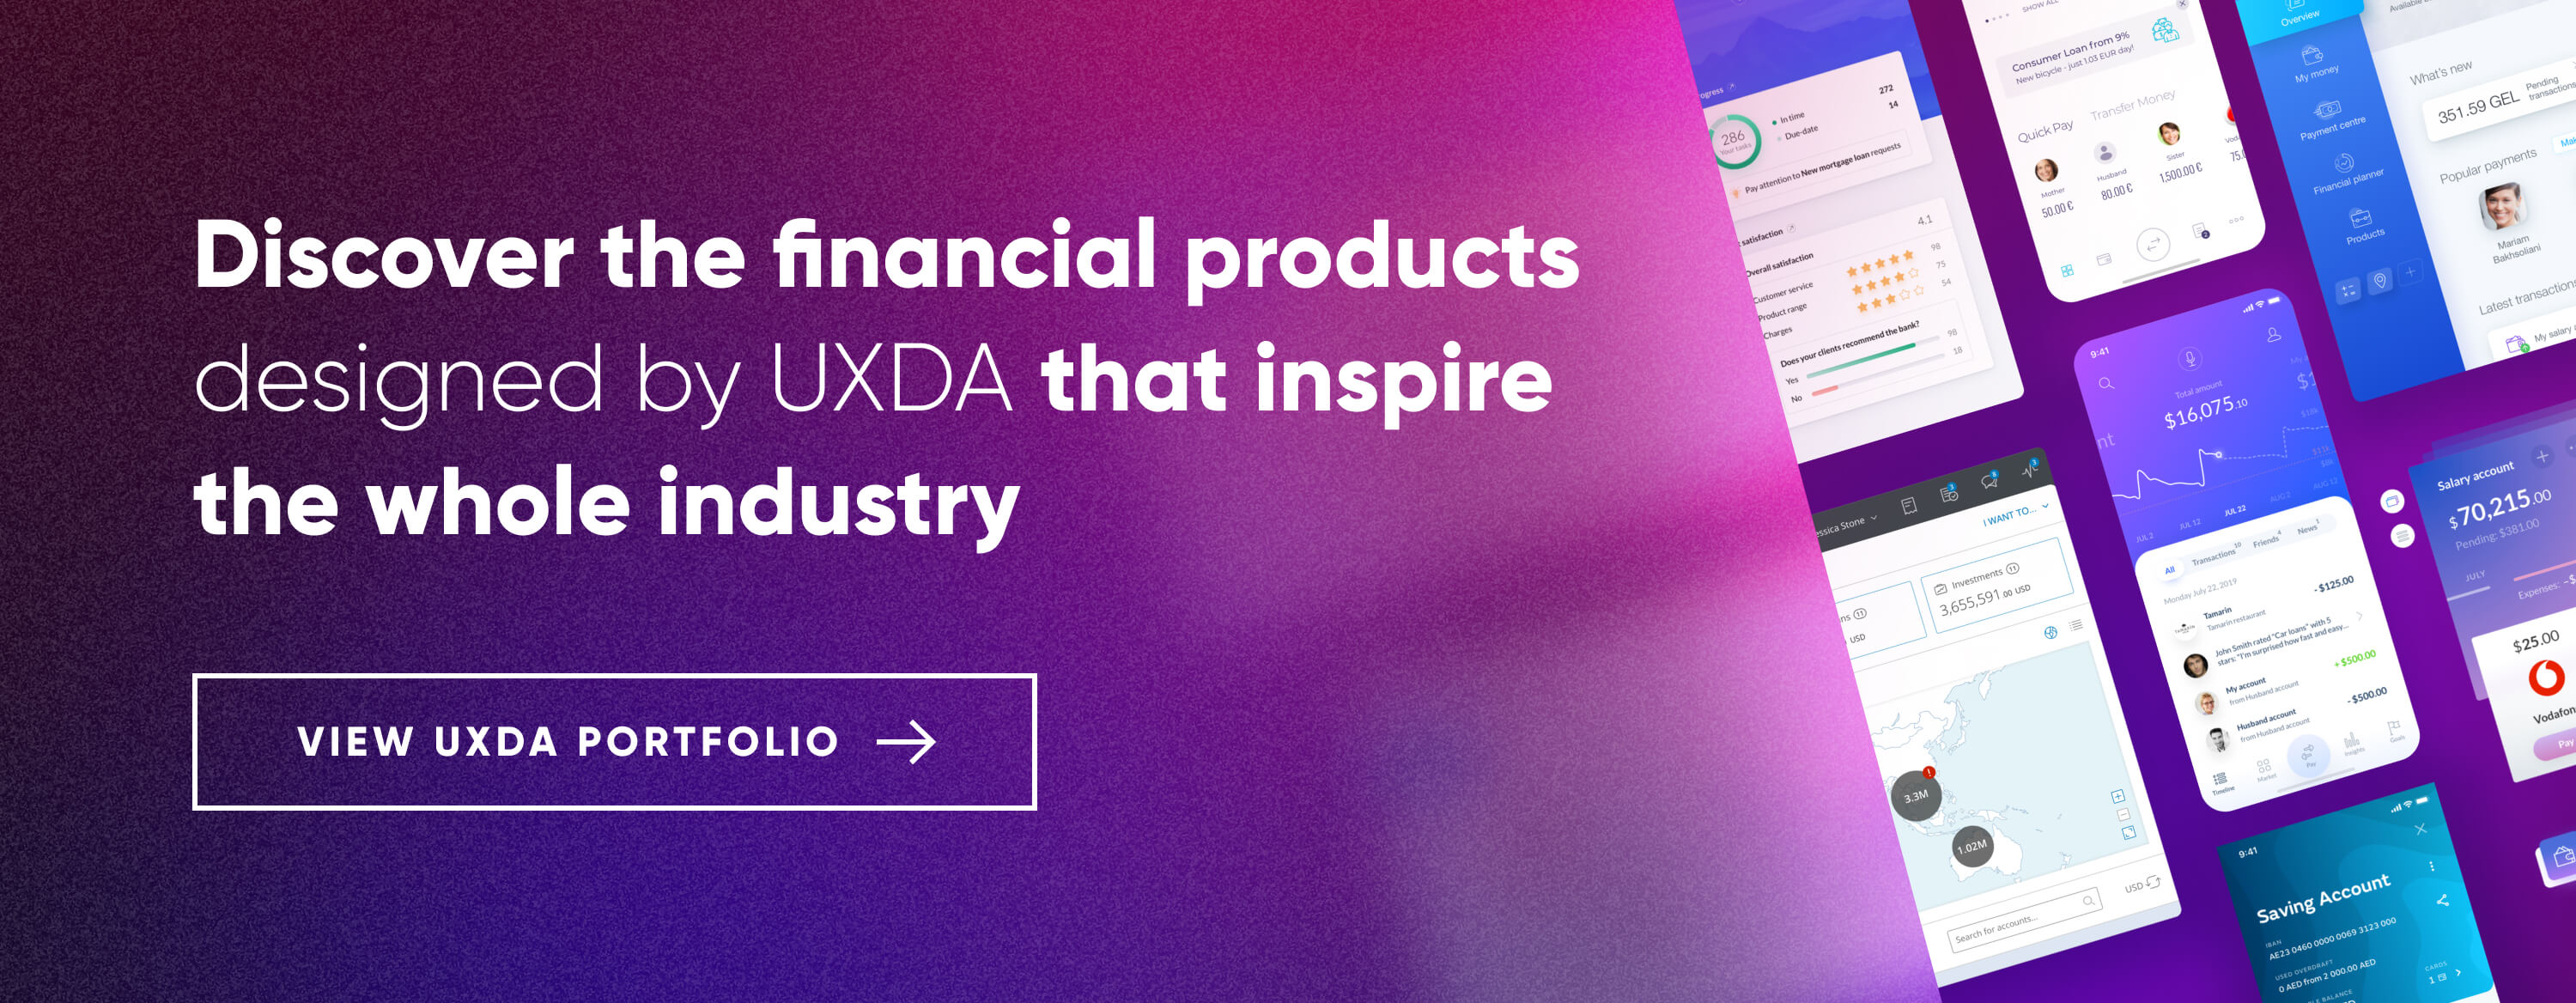 uxda-portfolio-financial-digital-product-inspire-industry-ux-1669632020.jpg